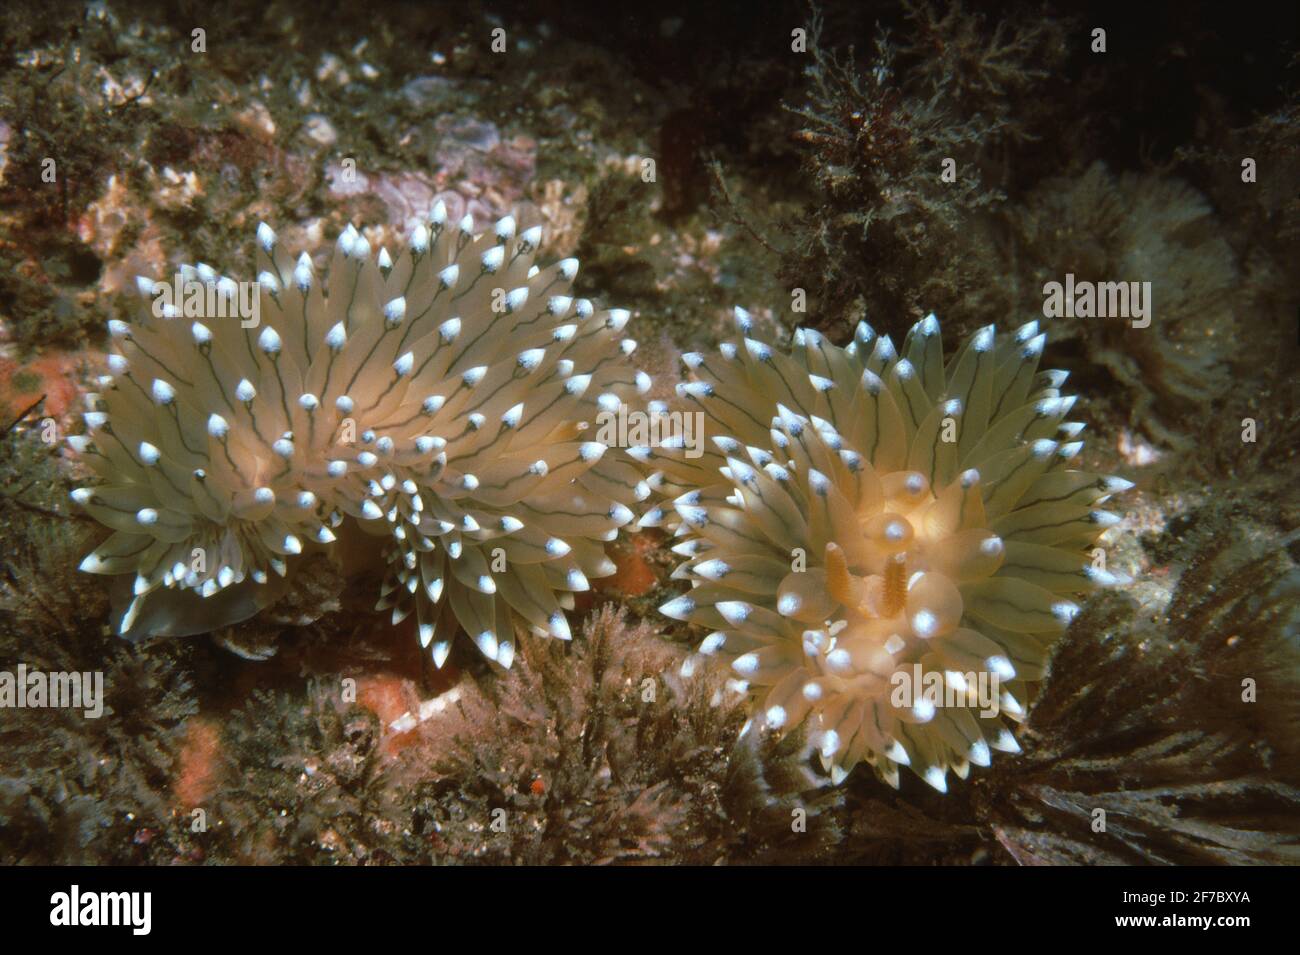 Nudibranch or sea slug (Antiopella cristata) pair feeding on bryozoan turf, UK. Stock Photo